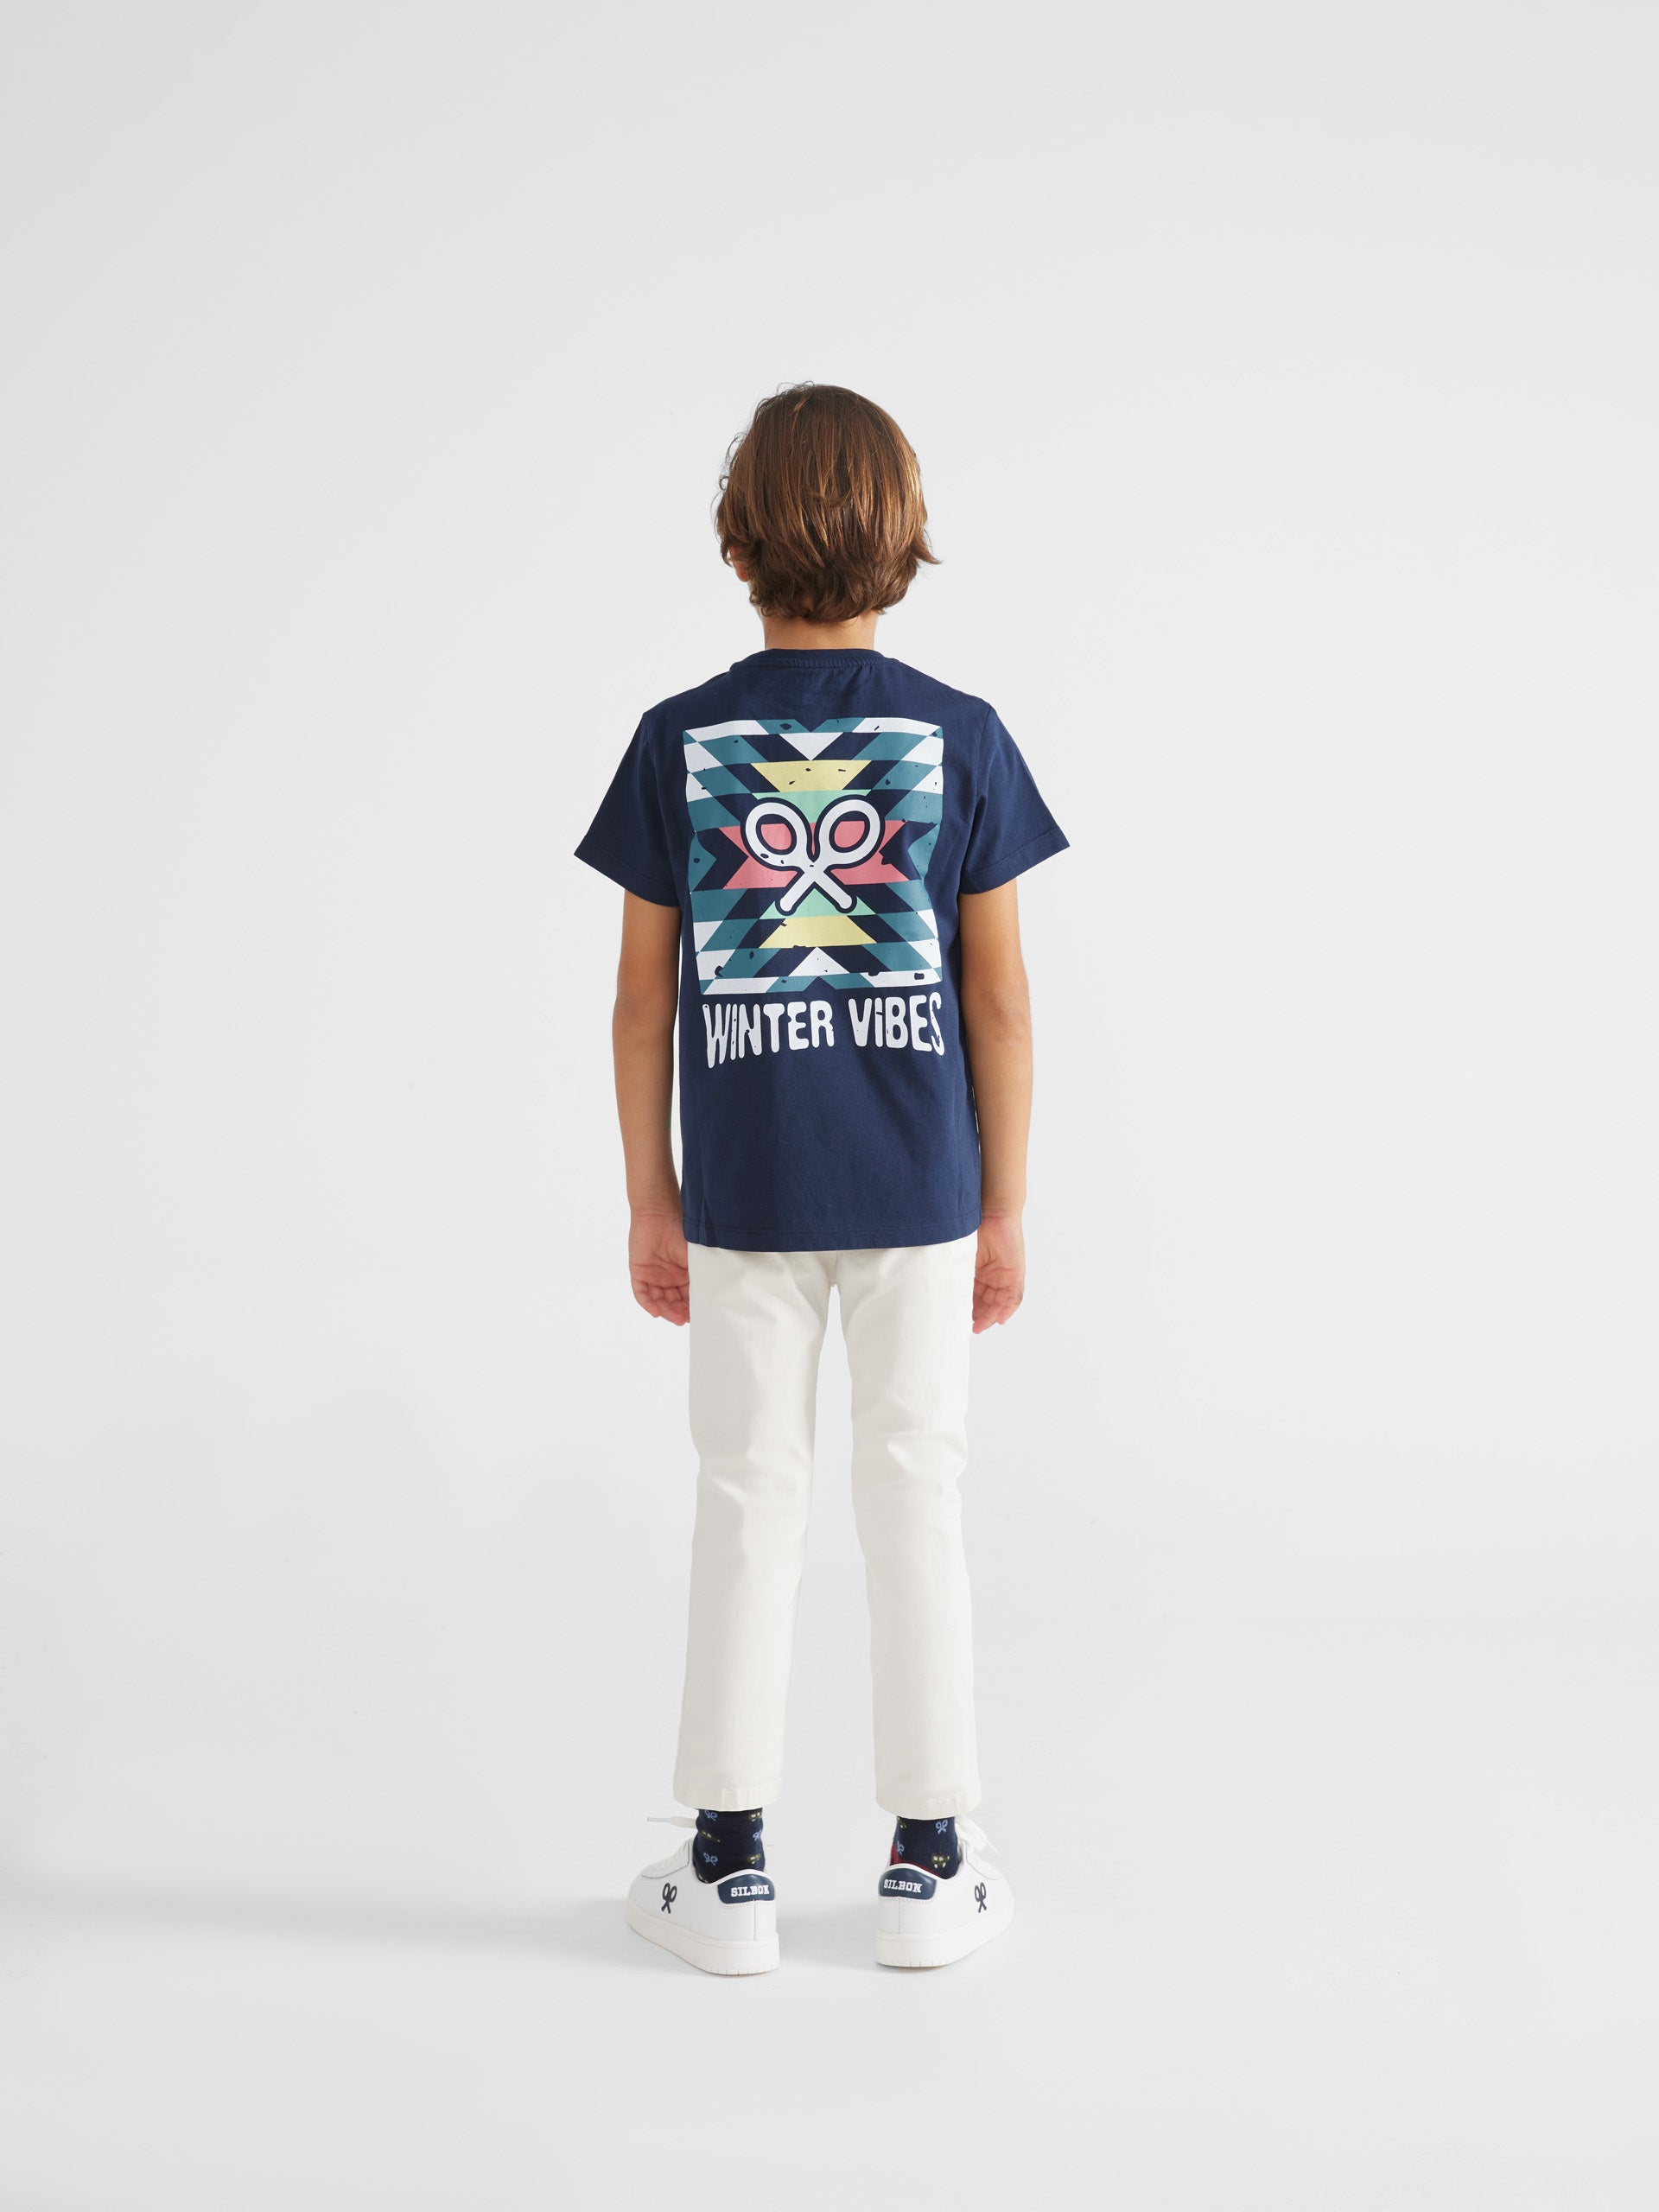 T-shirt bleu marine ambiance hivernale enfant